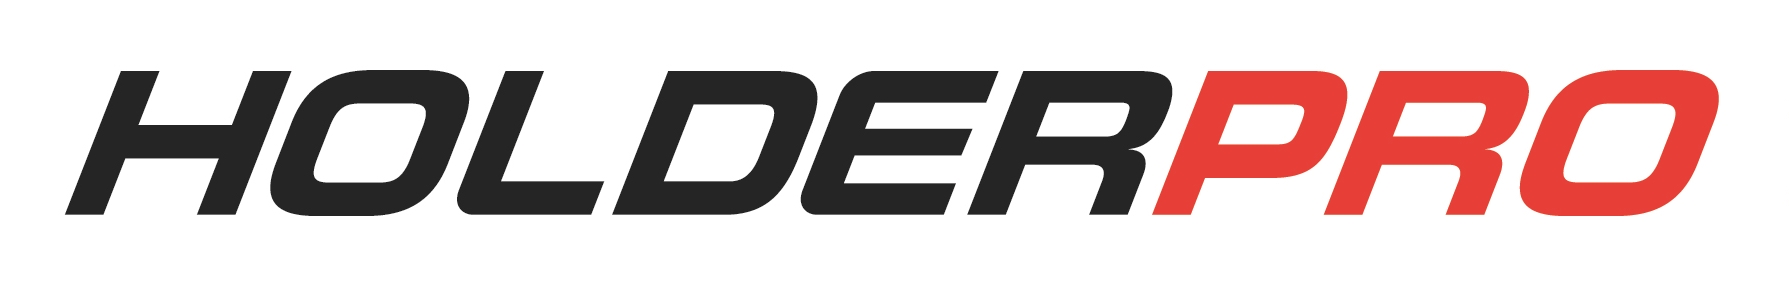 holder_pro_logo